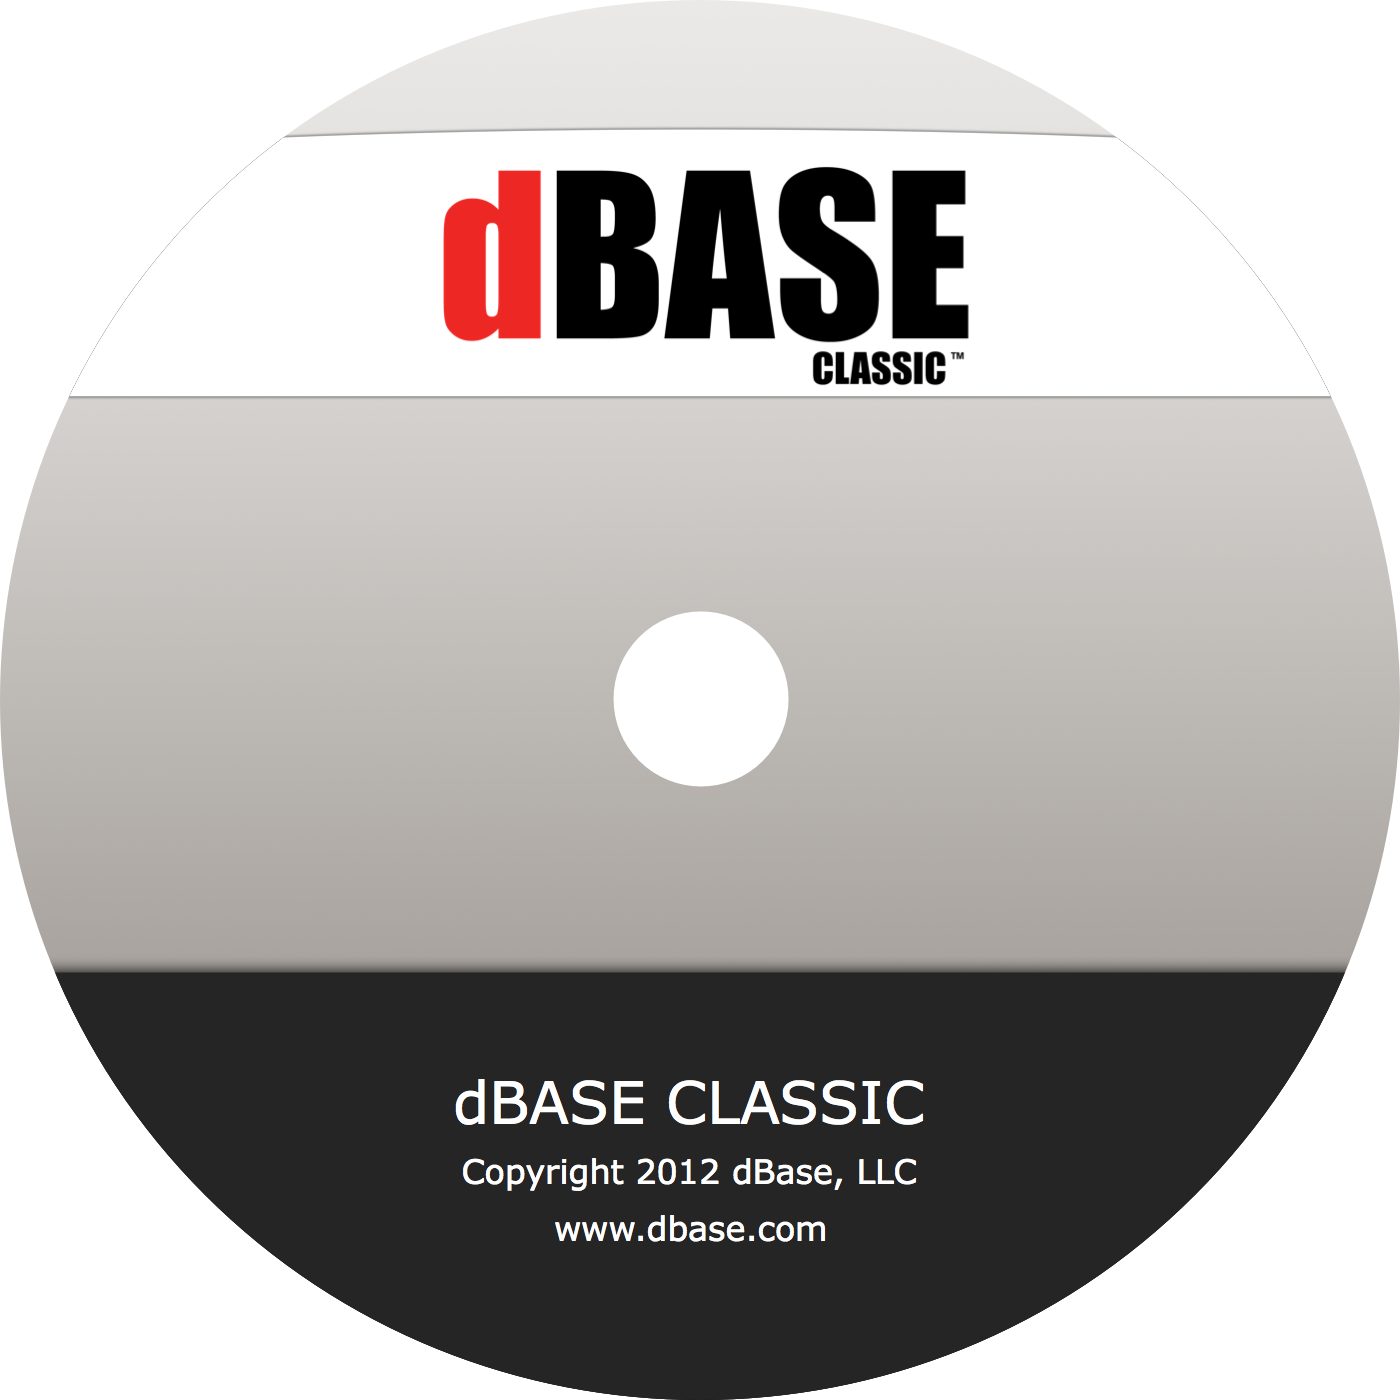 dBASE CLASSIC CD